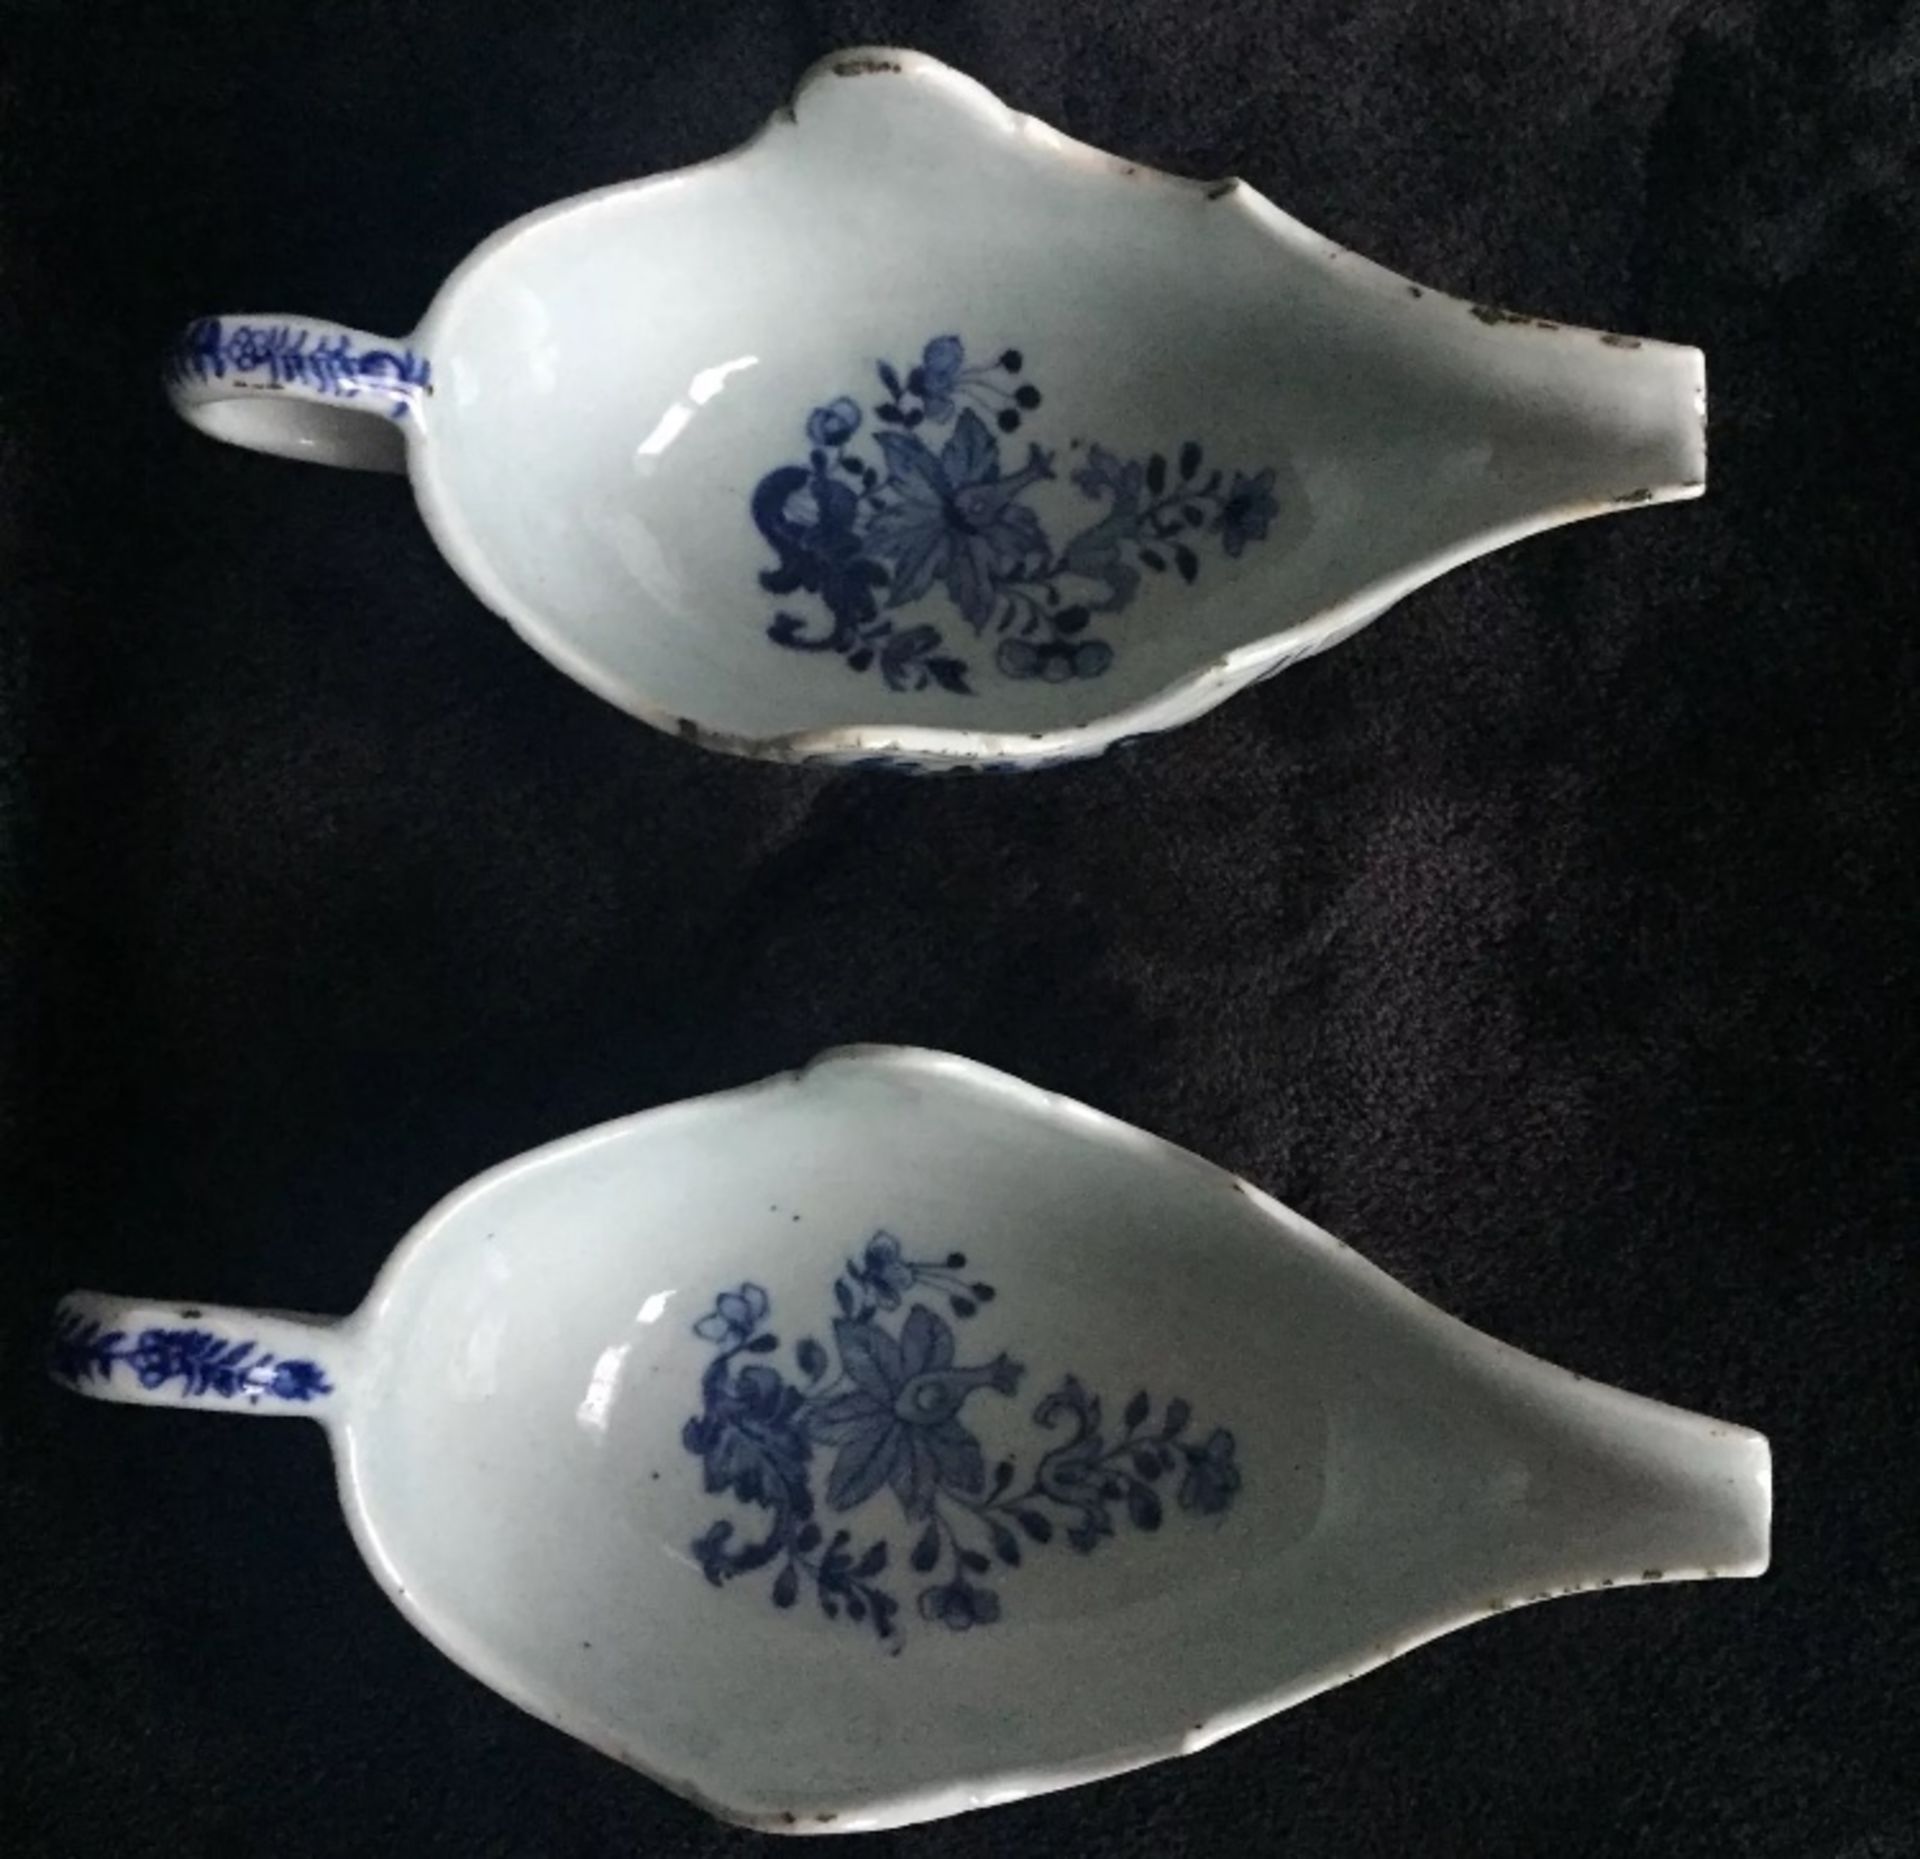 Rare pair of antique Chinese porcelain sauceboats, Circa 1750 (Qianlong period) - Image 3 of 20